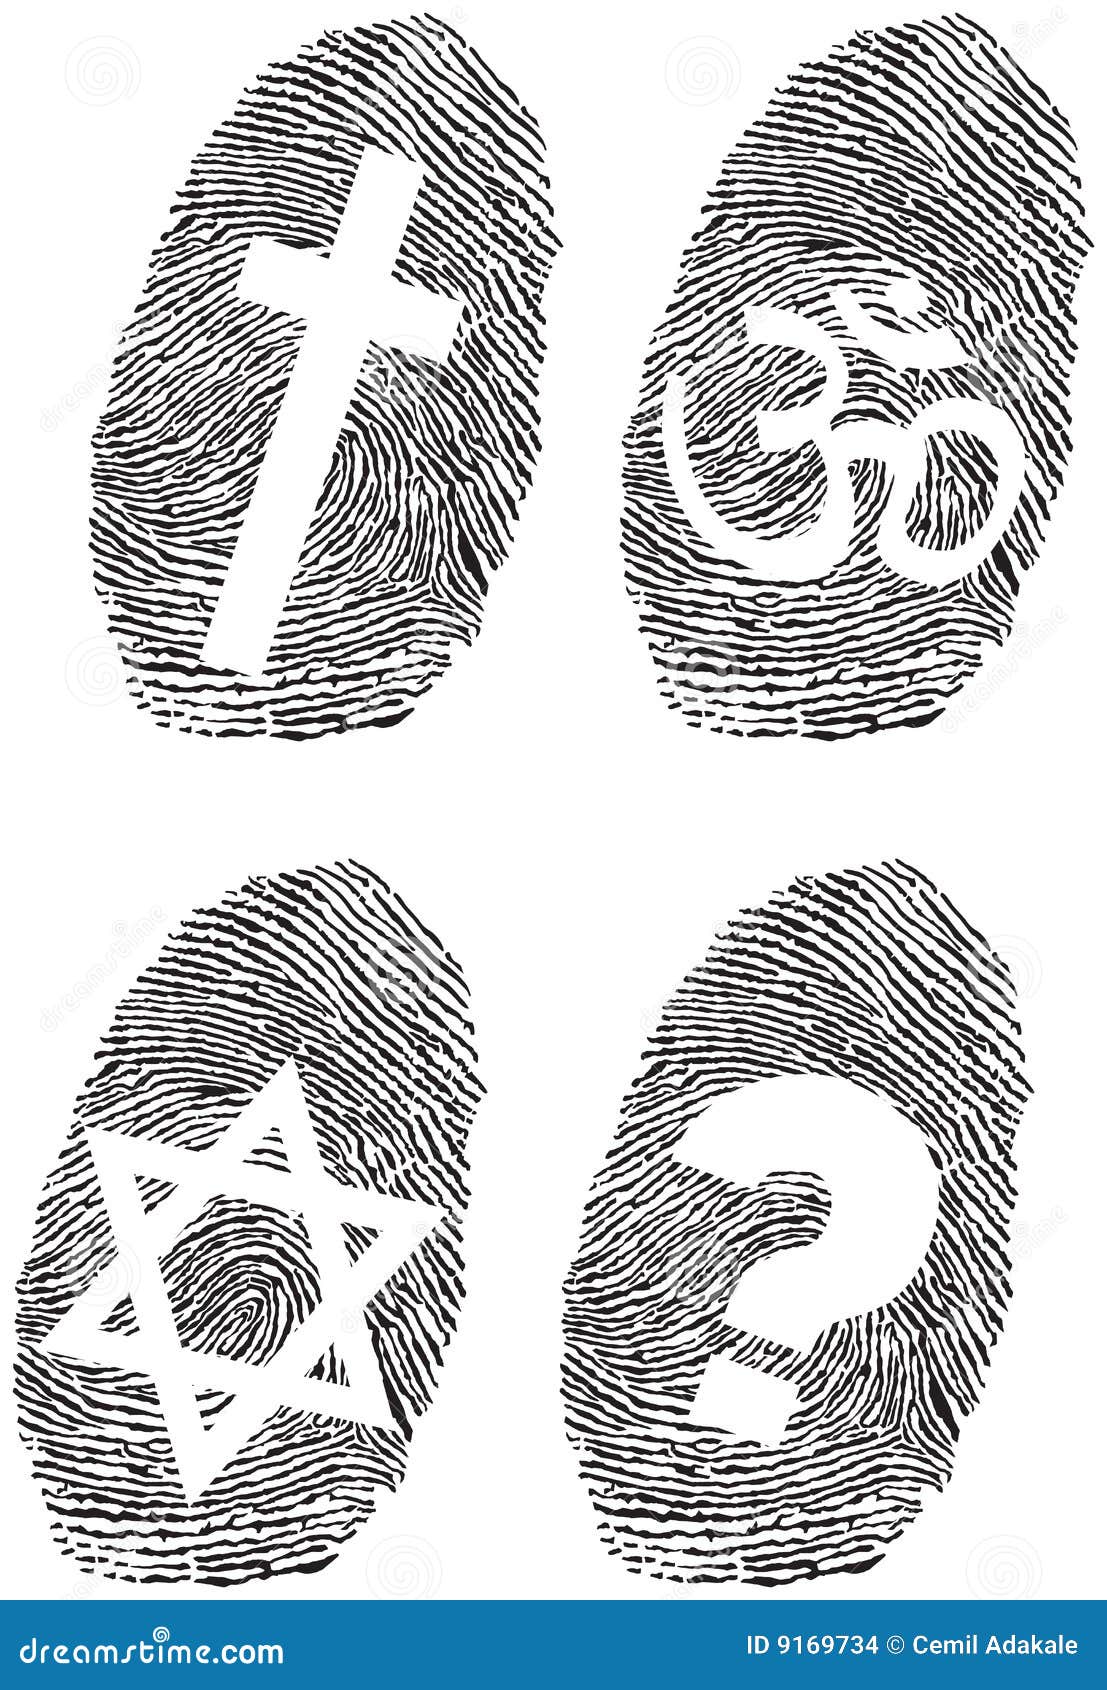 official religion and fingerprint